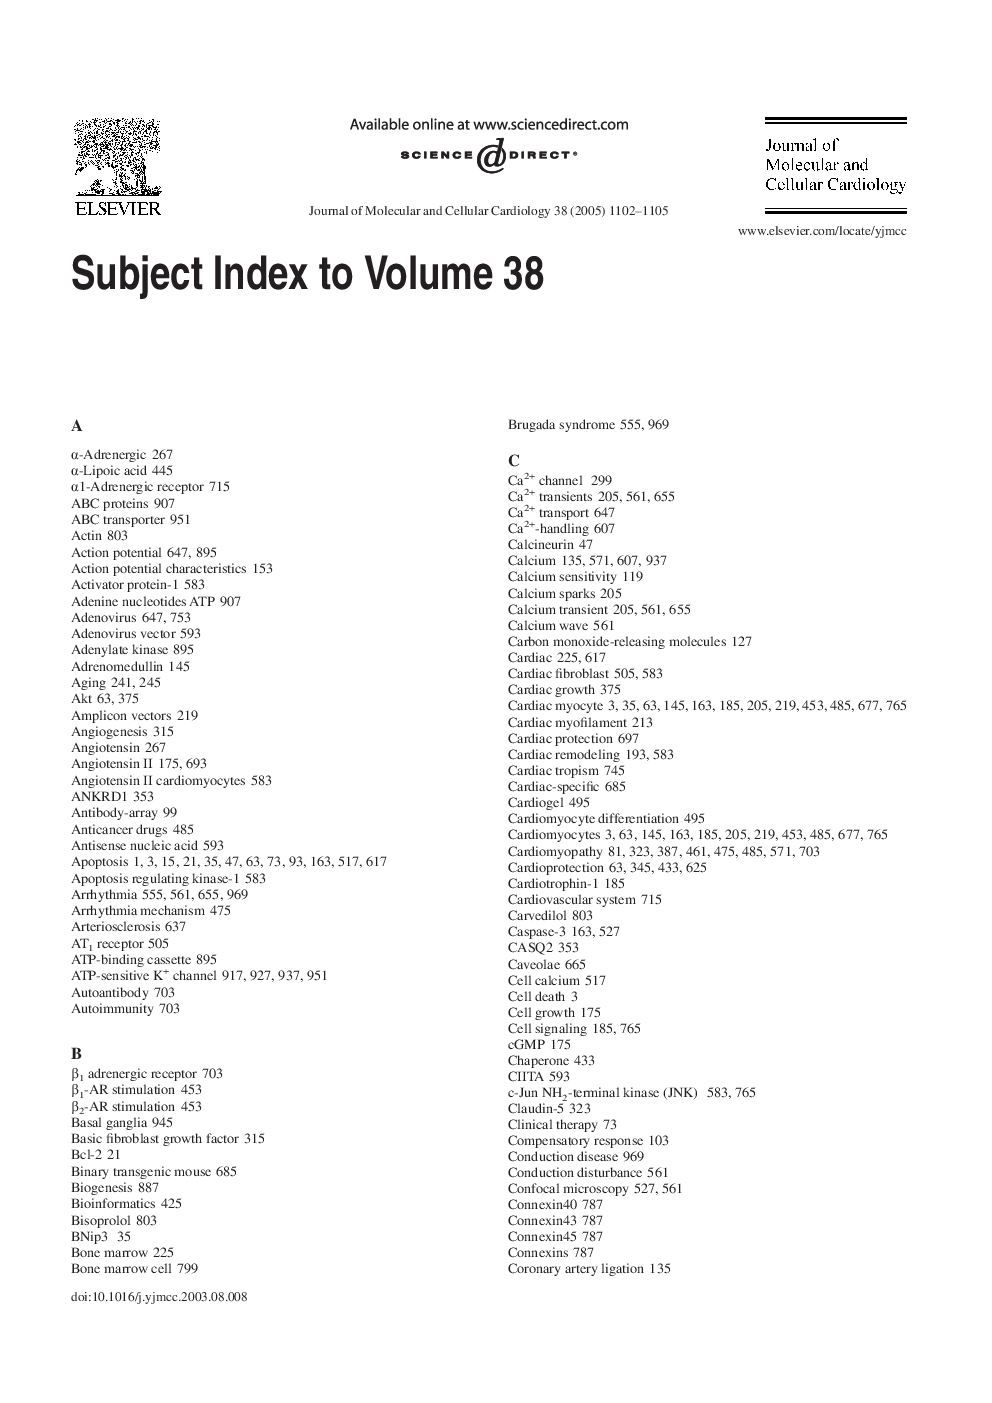 Subject Index to Volume